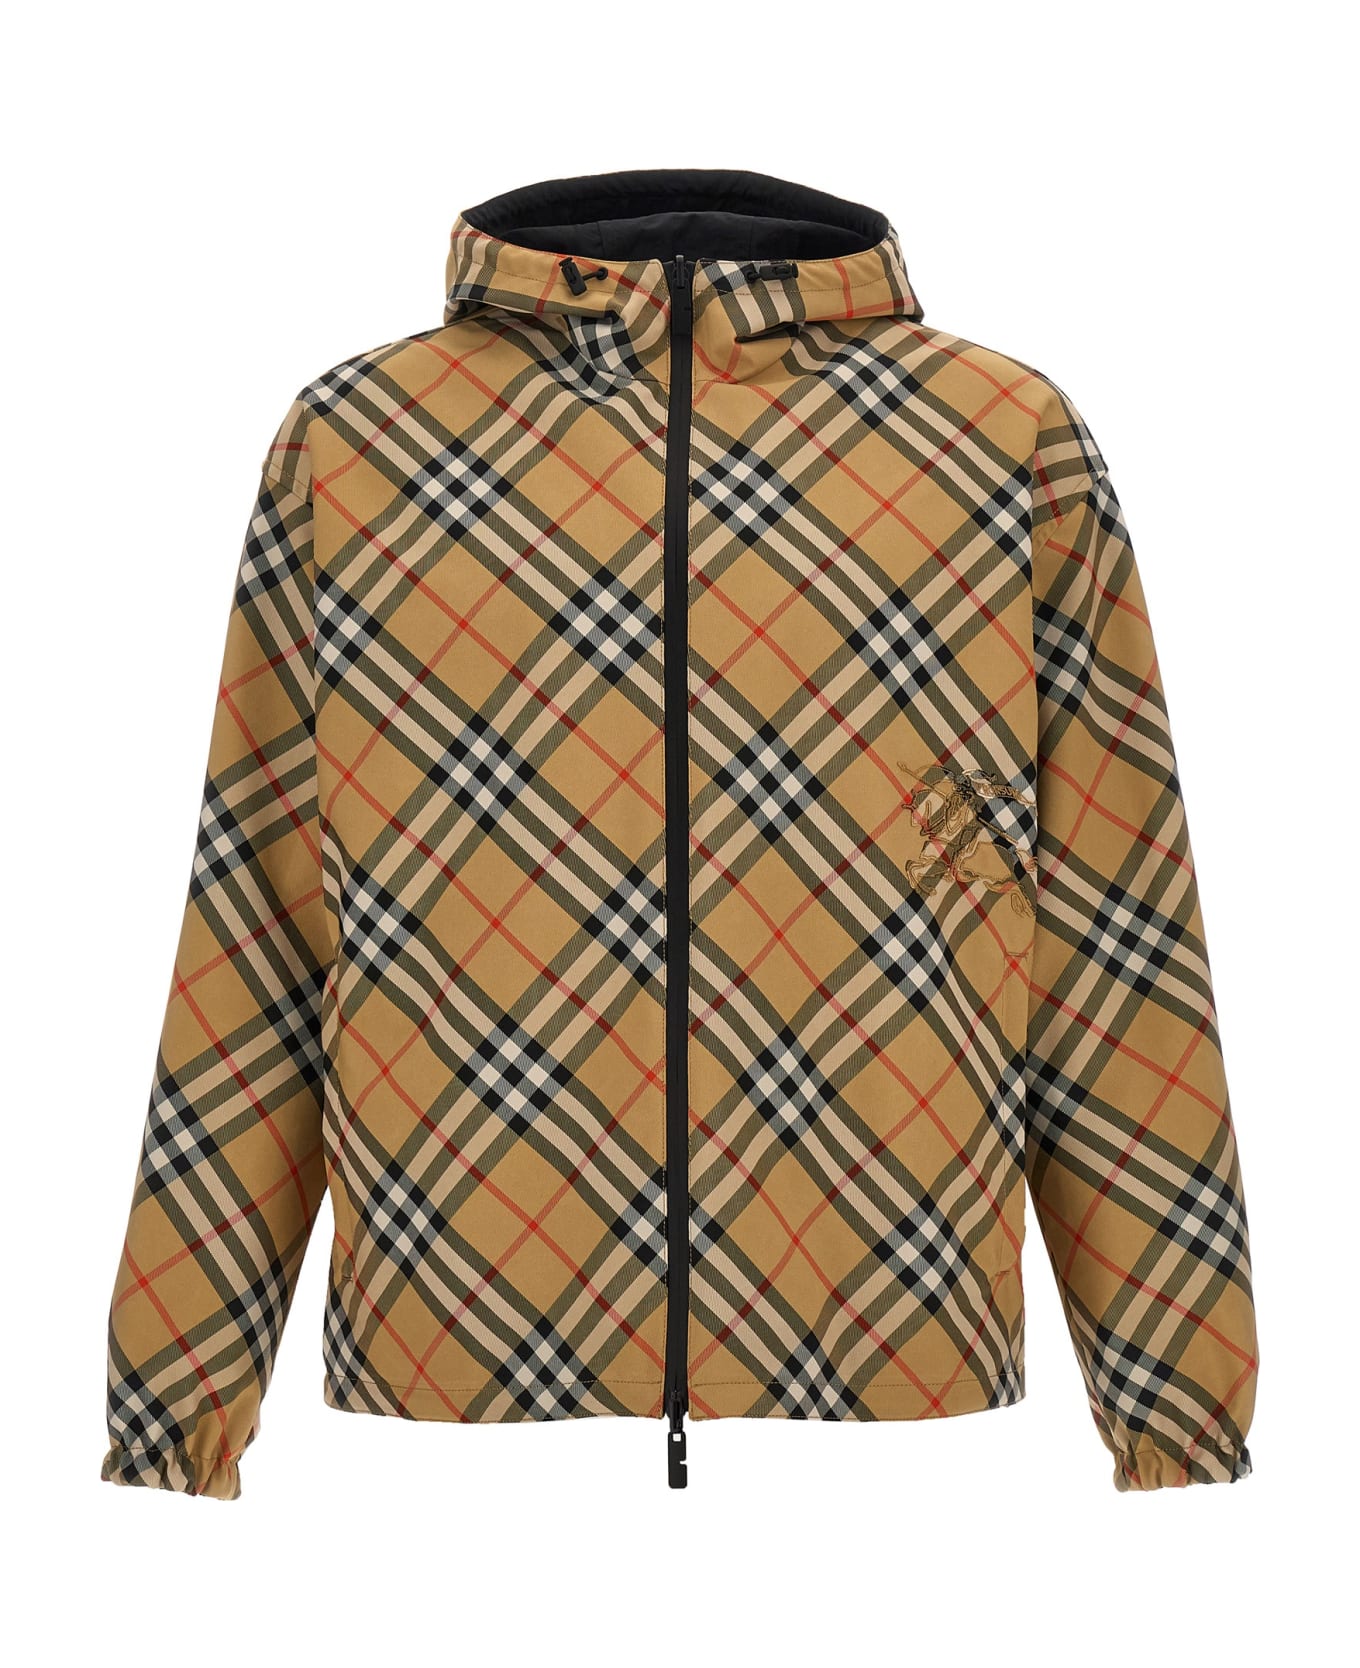 Burberry Check Print Reversible Jacket - Beige